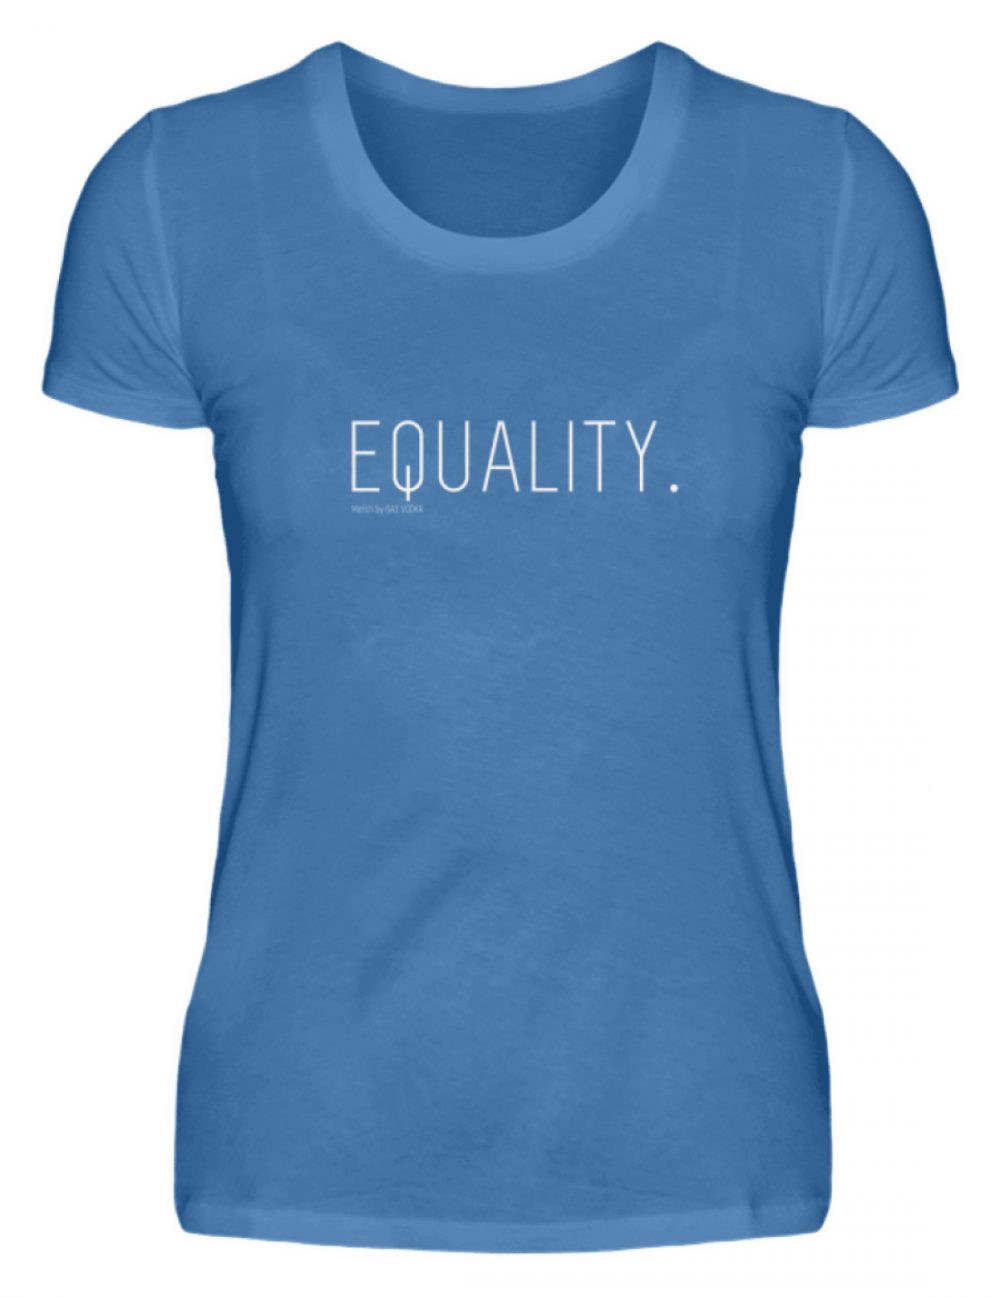 EQUALITY. - Damen Premiumshirt-2894